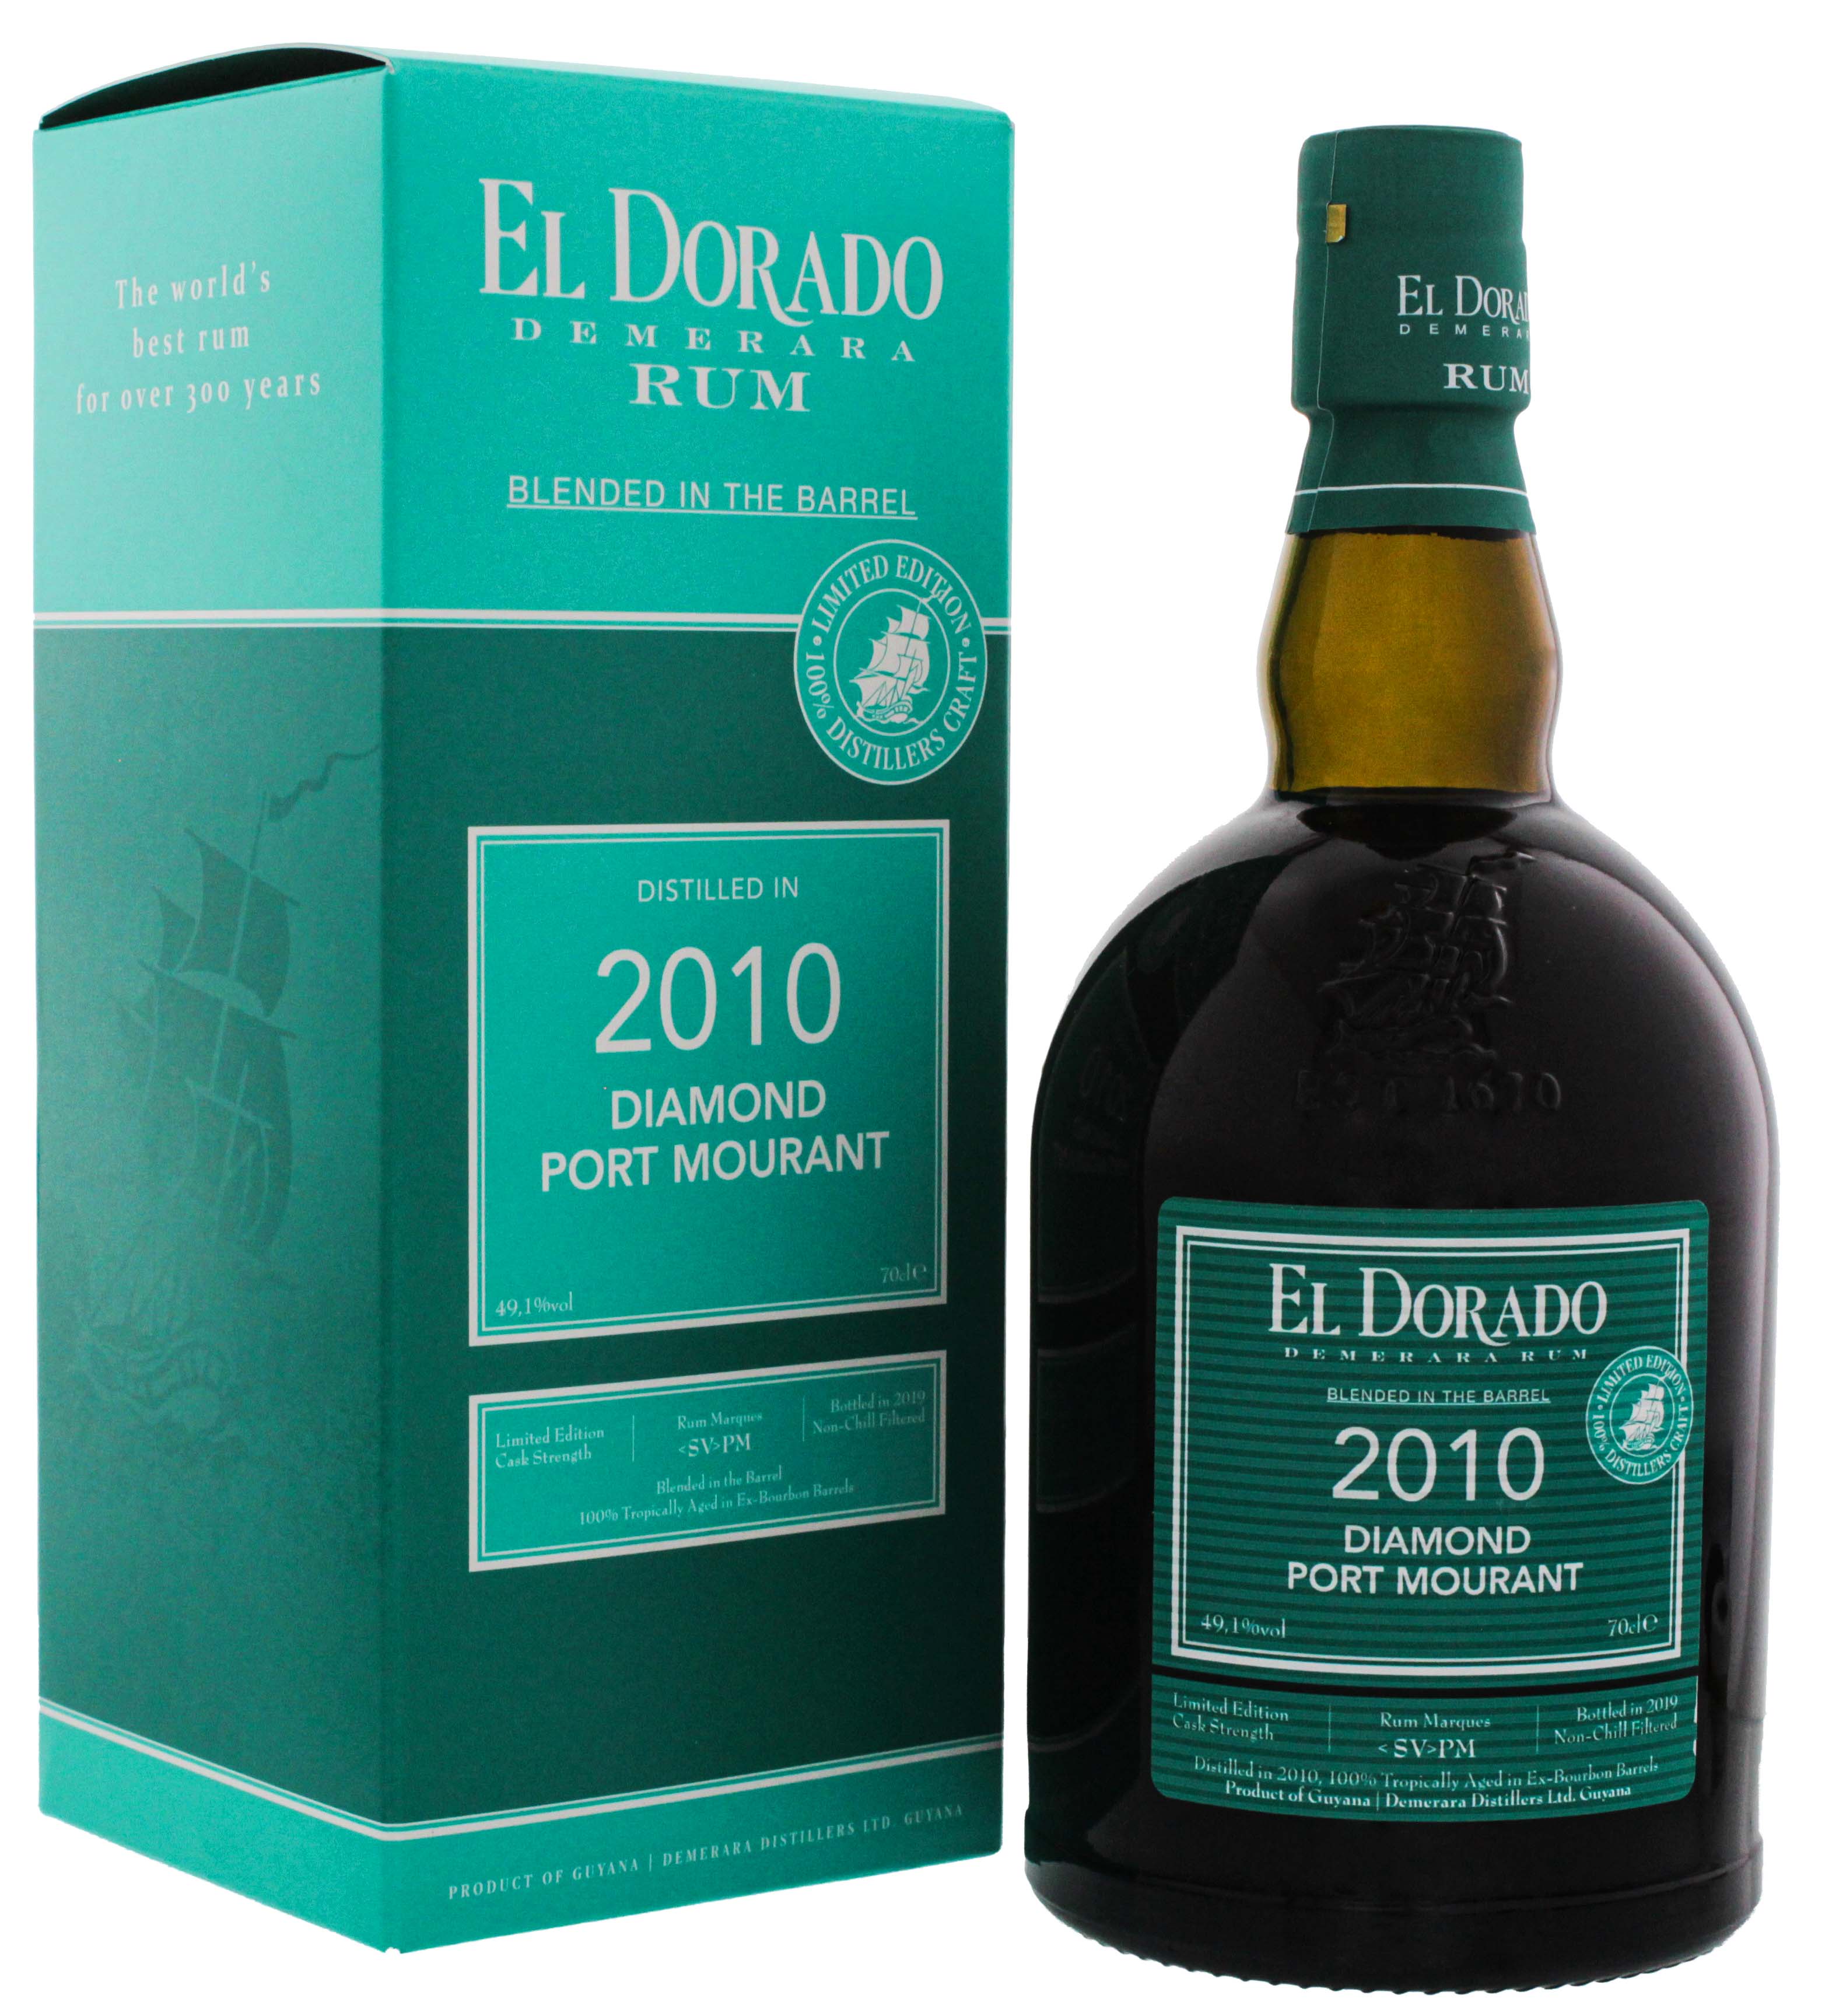 El Dorado Rum Blended in the Barrel 2010/2019 Diamond Port Mourant Limited Ed. 0,7L